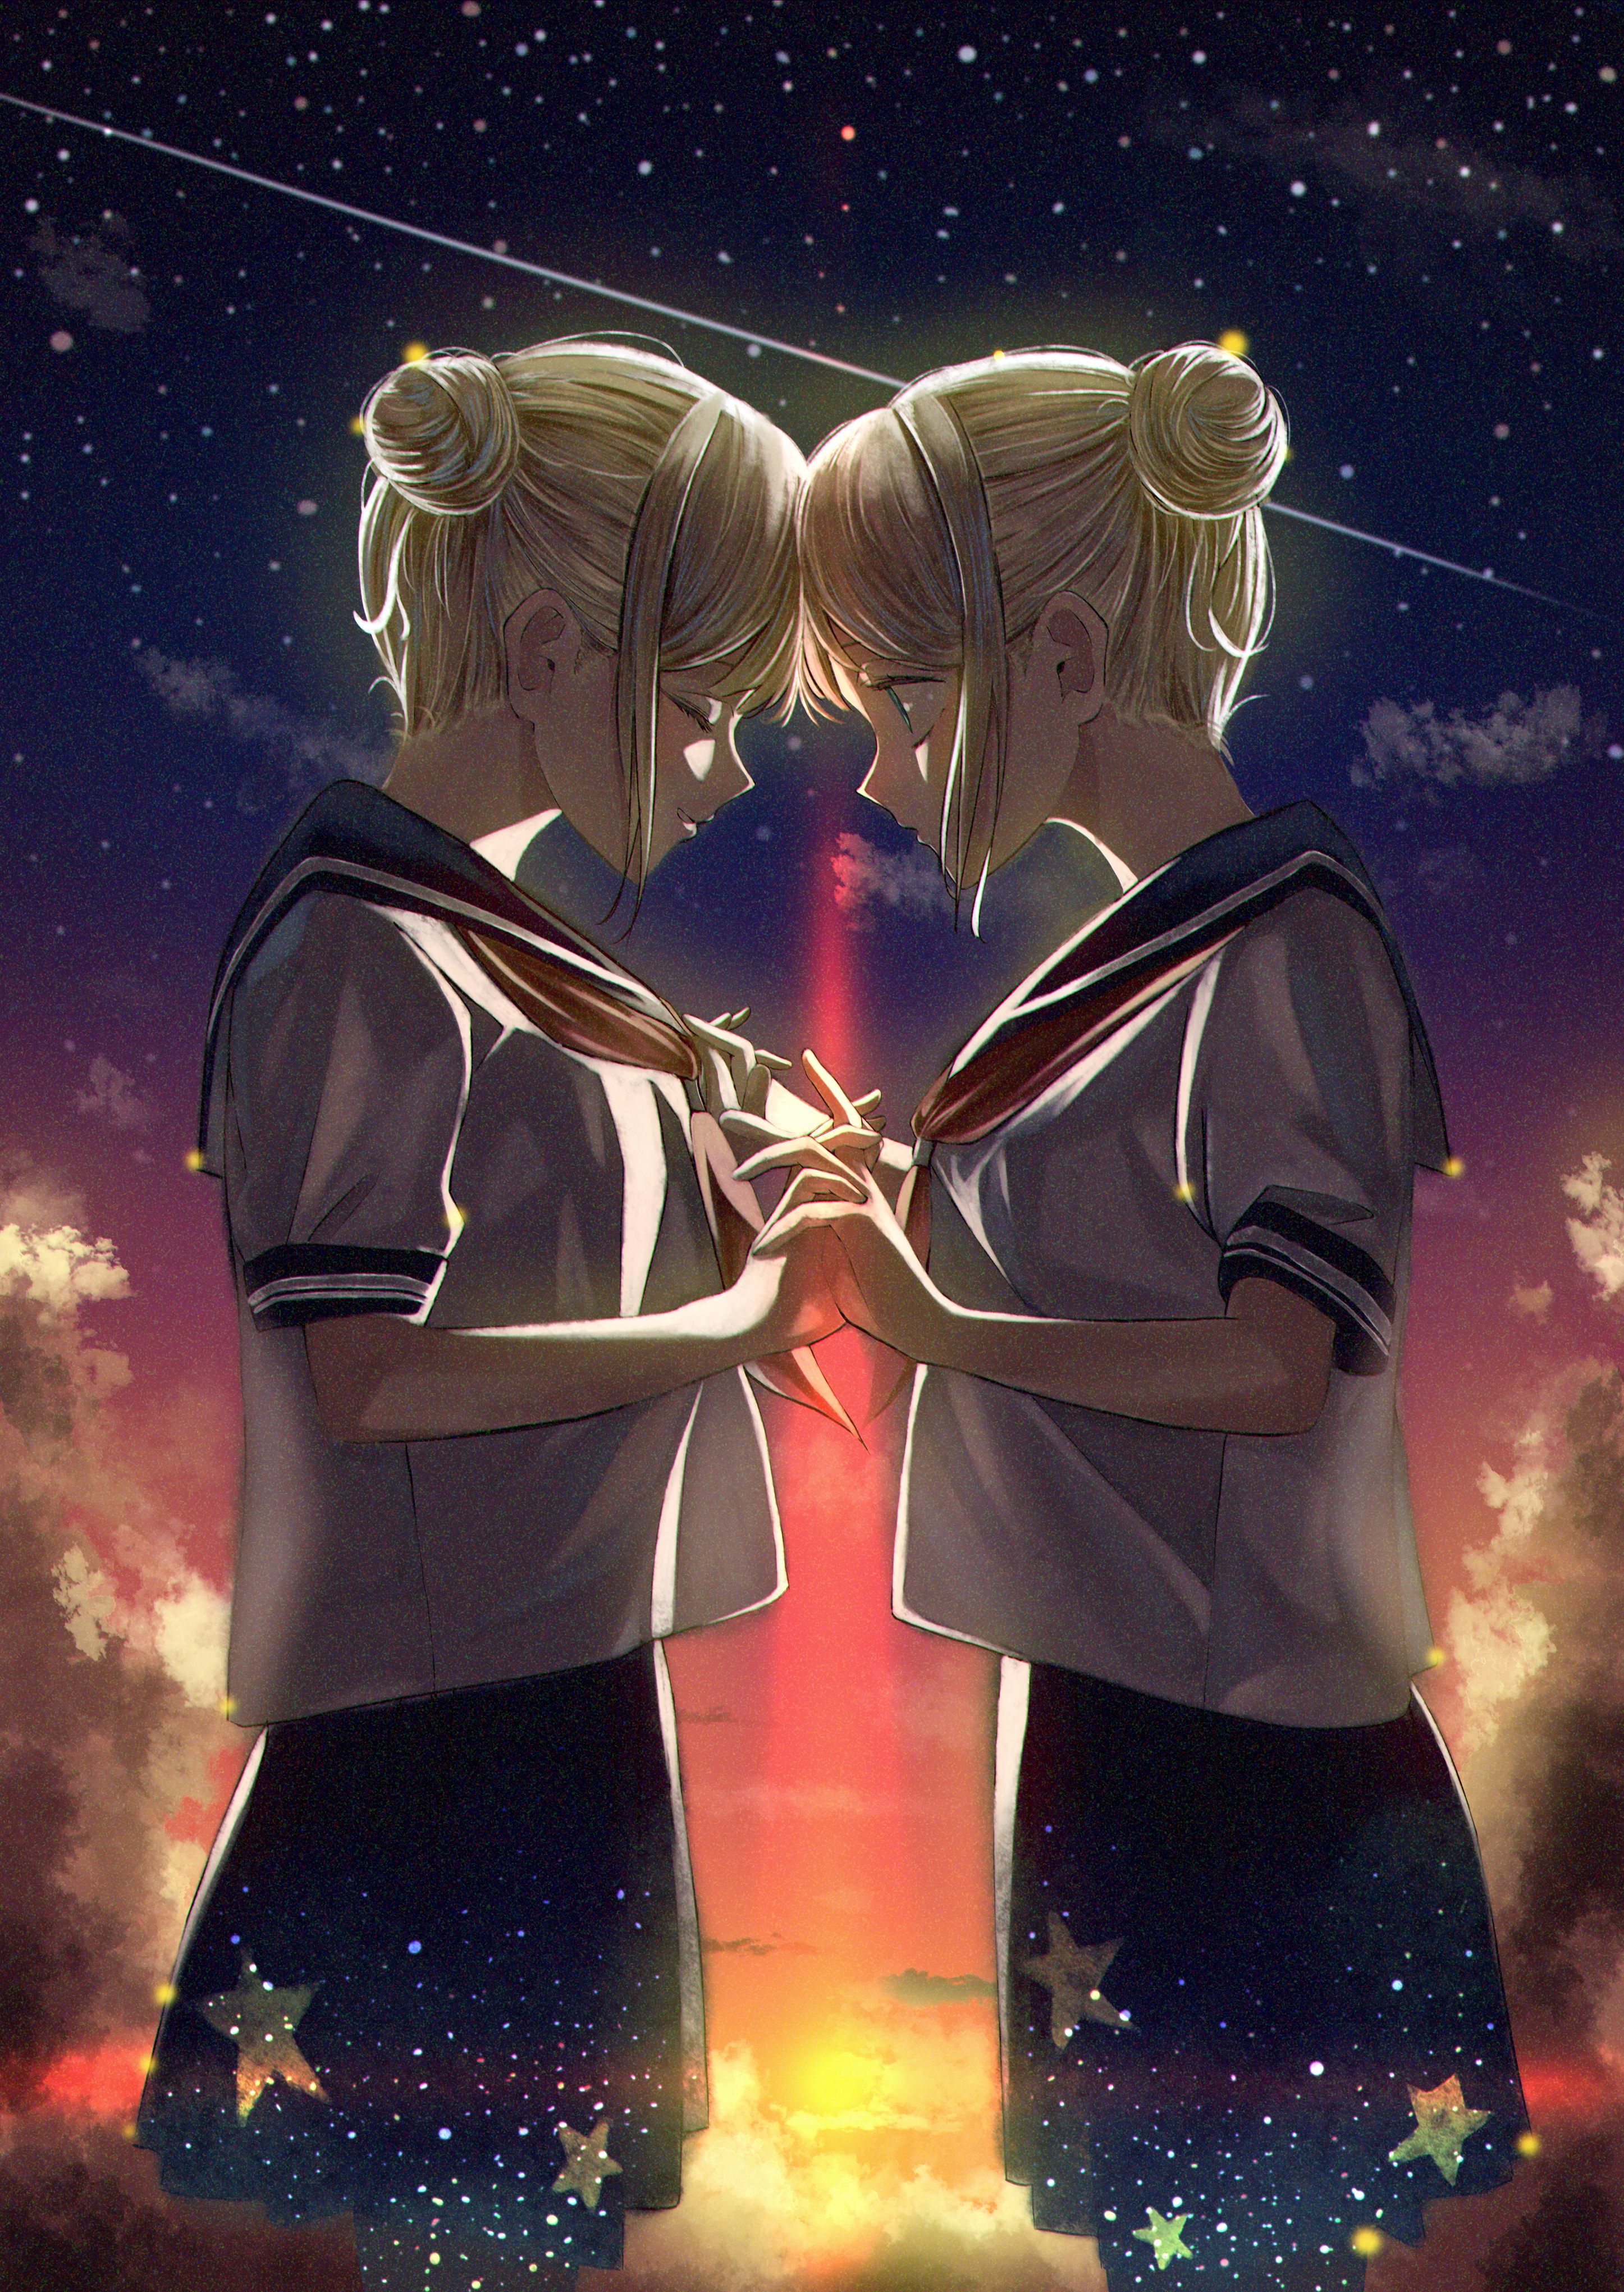 Anime Anime Girls Original Characters Twins Two Women Artwork Digital Art Fan Art 2893x4082